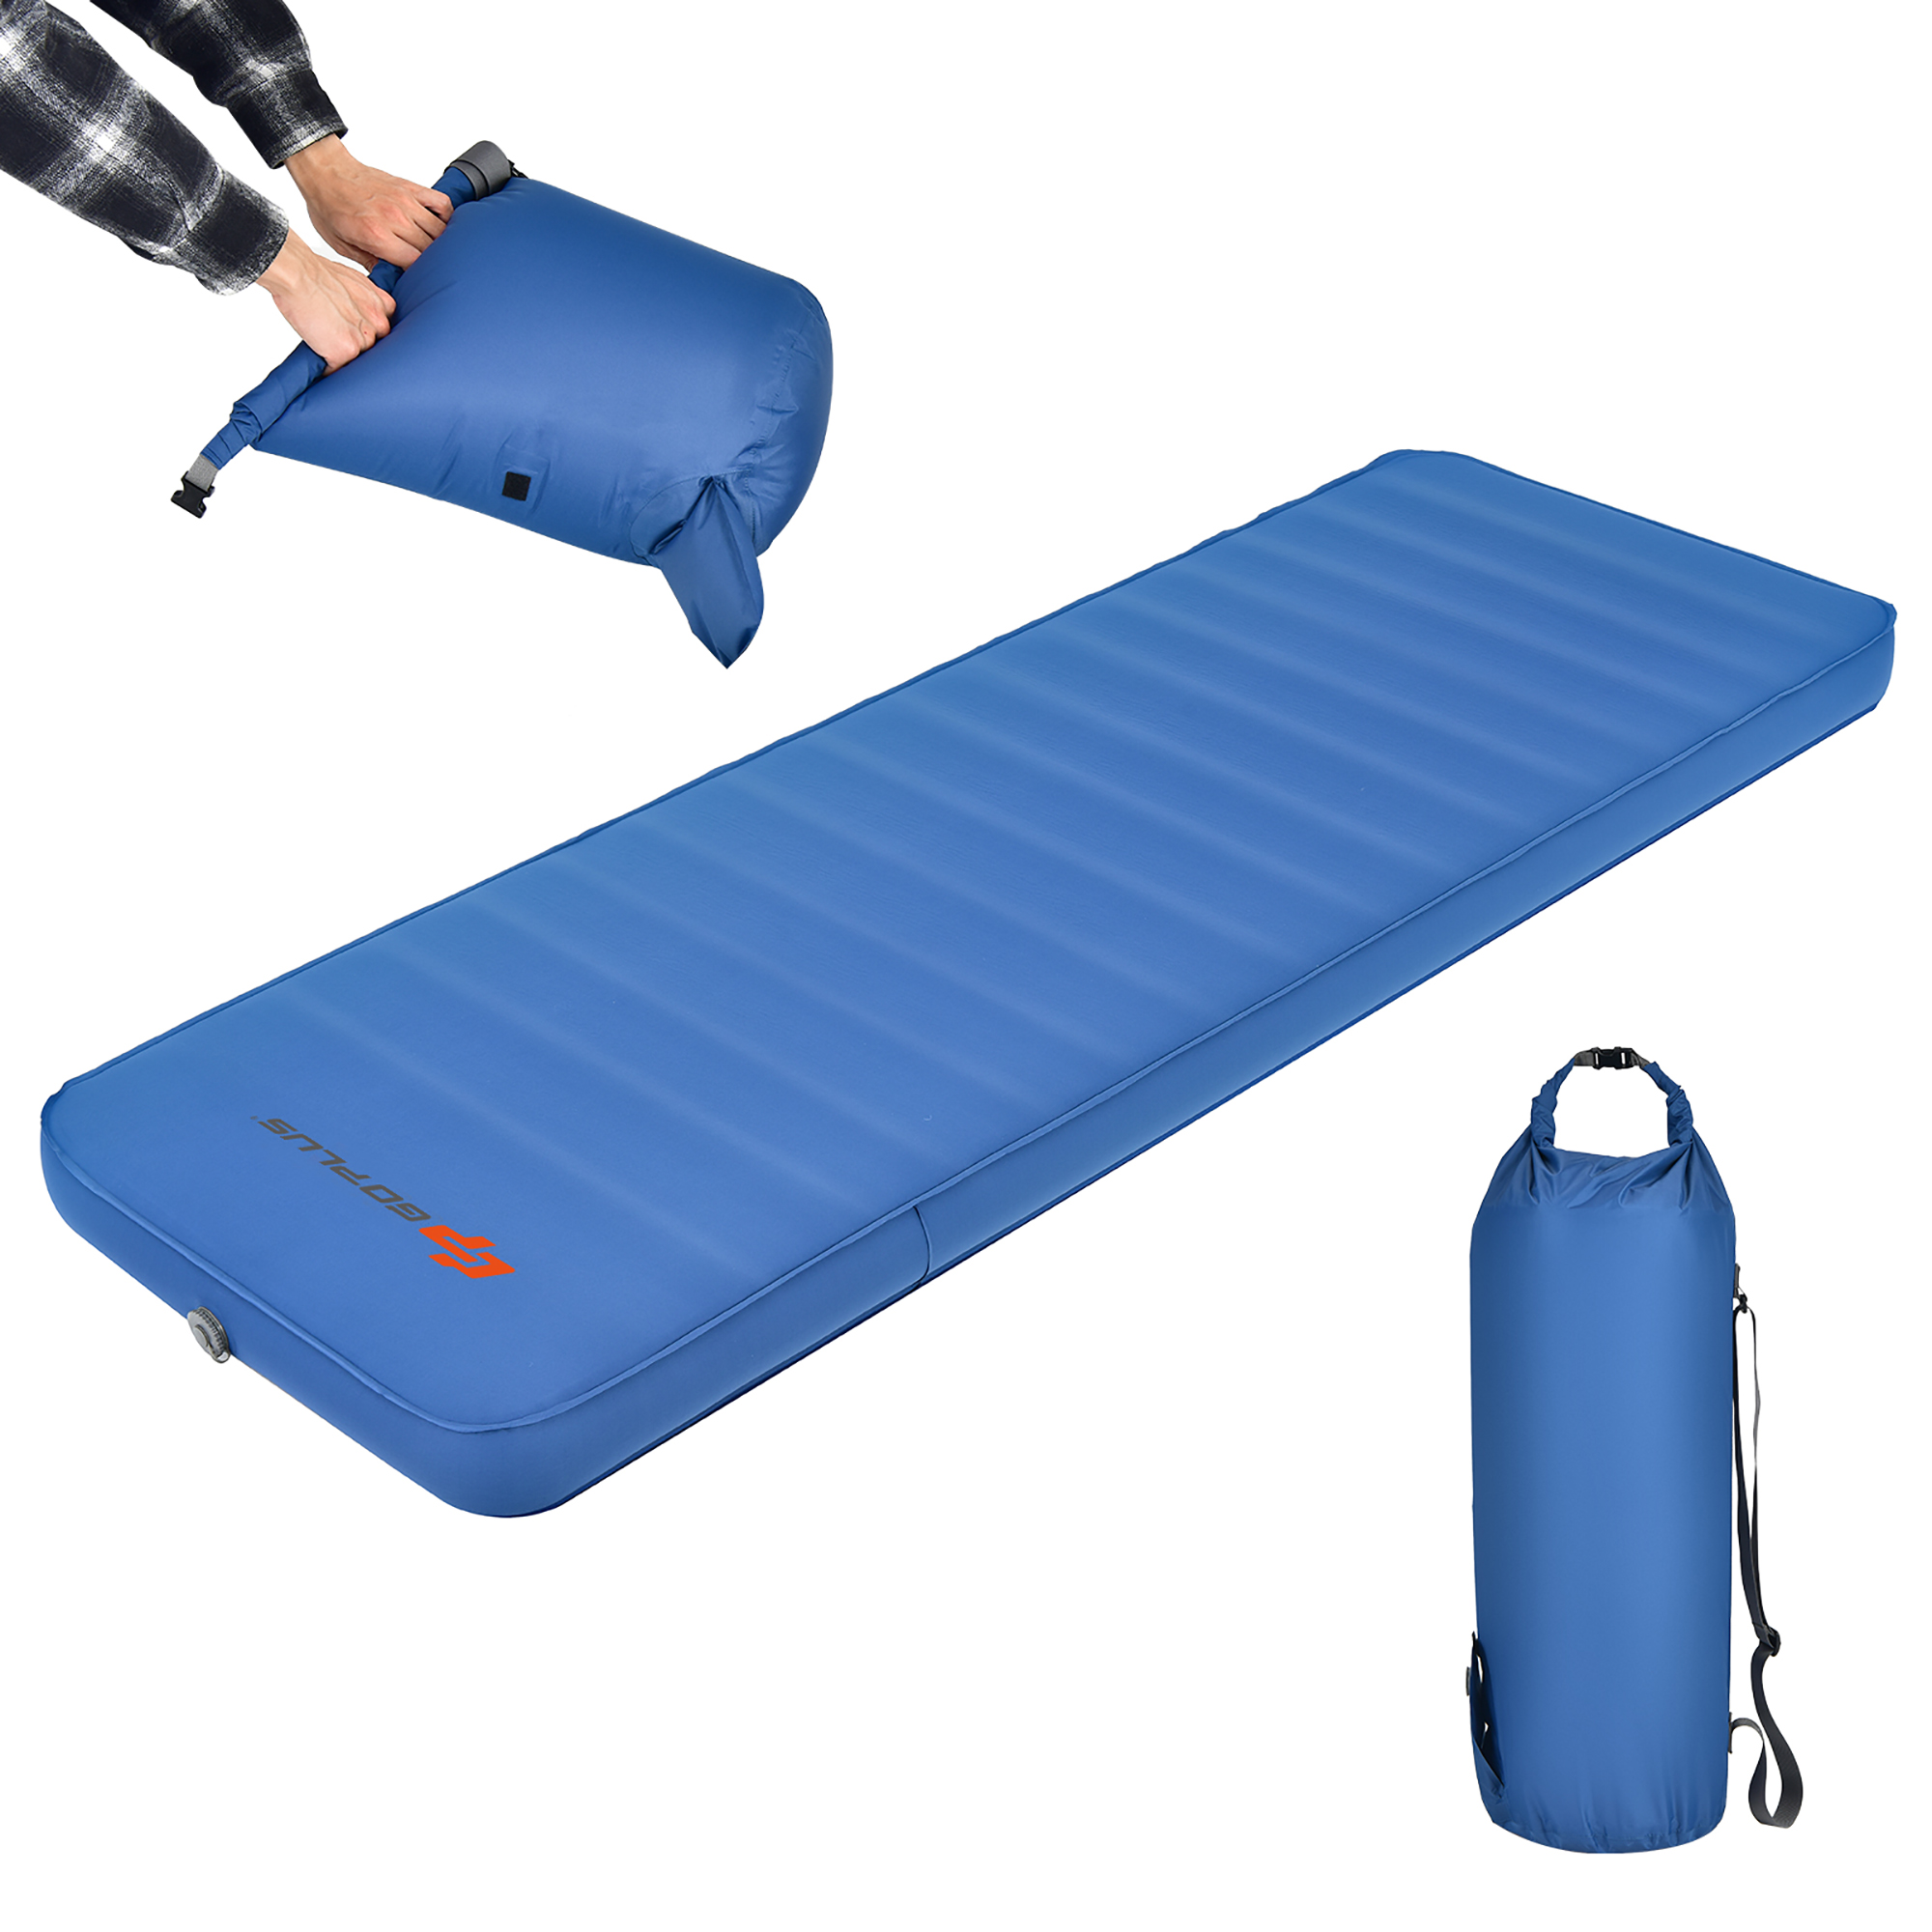 Costway Goplus Folding Sleeping Pad, Self Inflating Camping Mattress with Carrying Bag Green\Blue